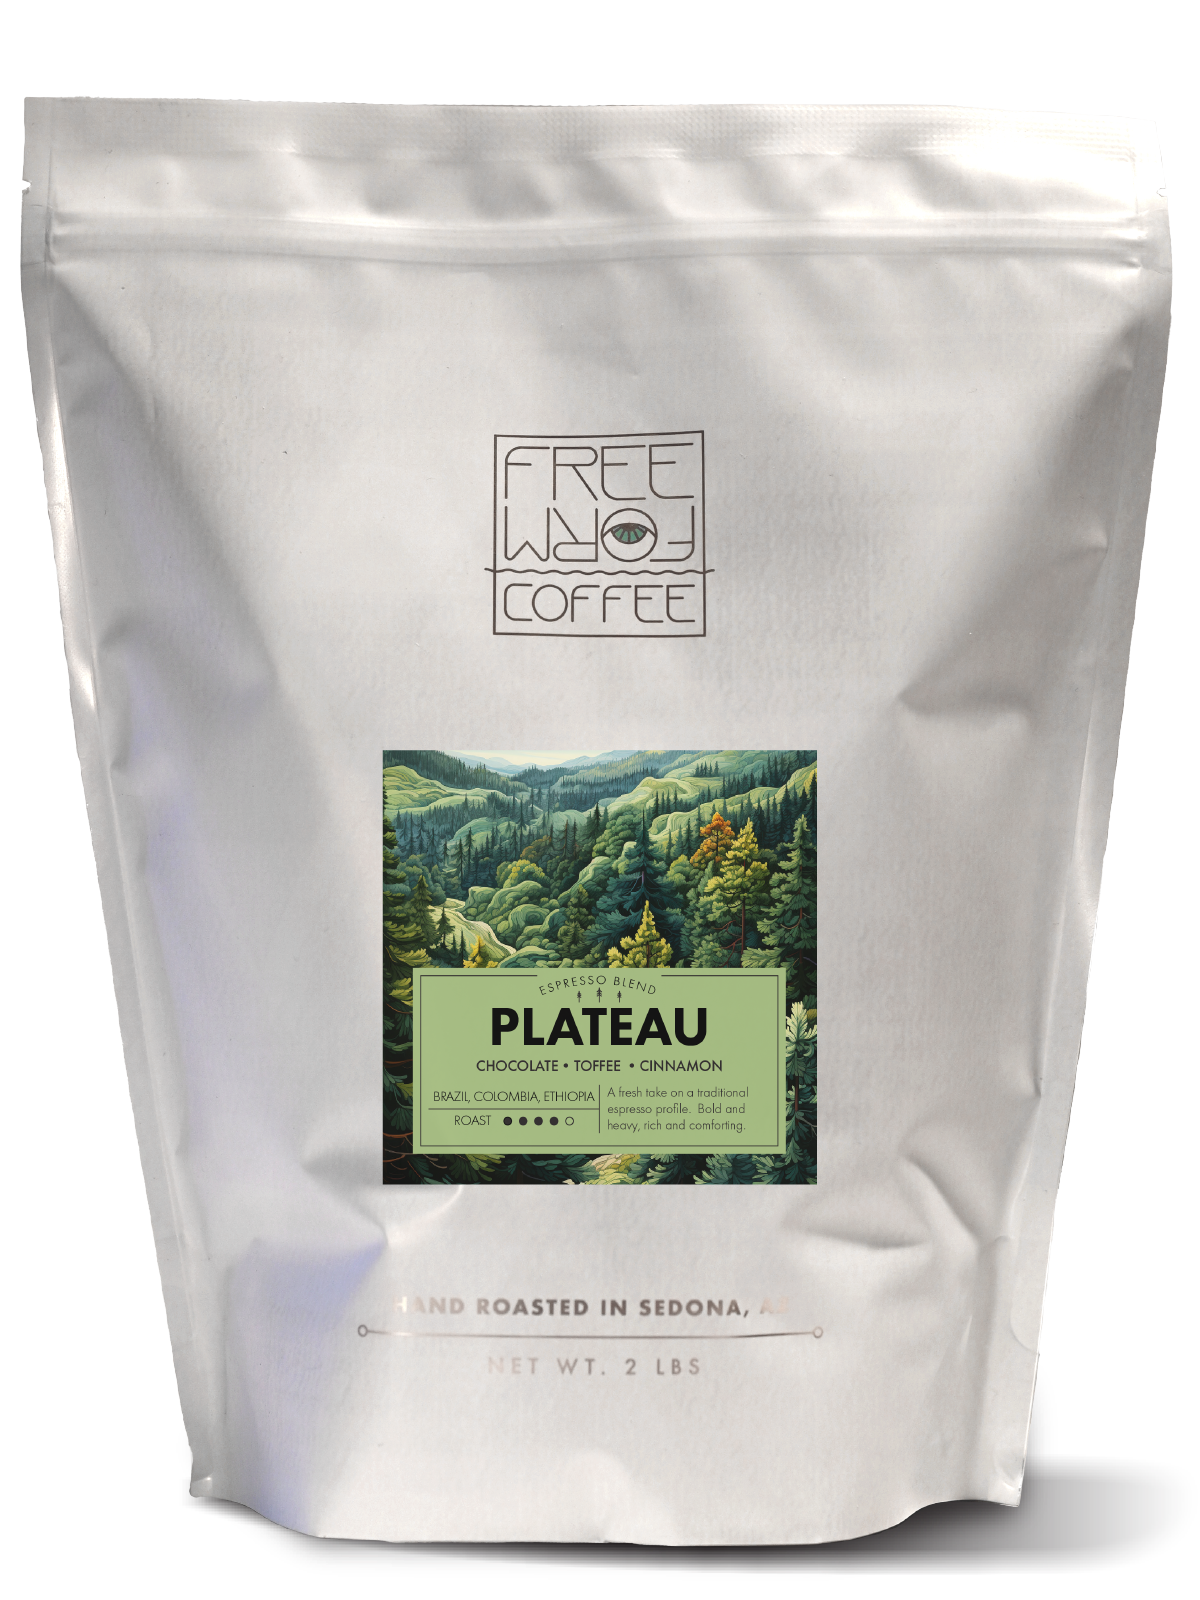 Plateau - Espresso Blend Gift Subscription